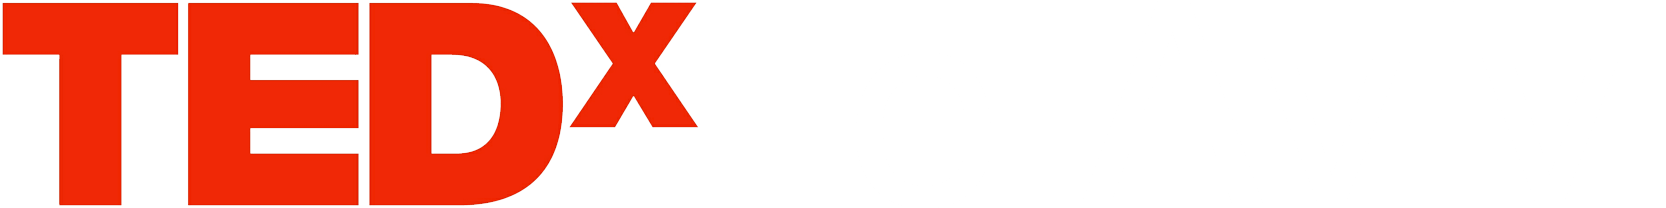 TED Talks Logo - LogoDix